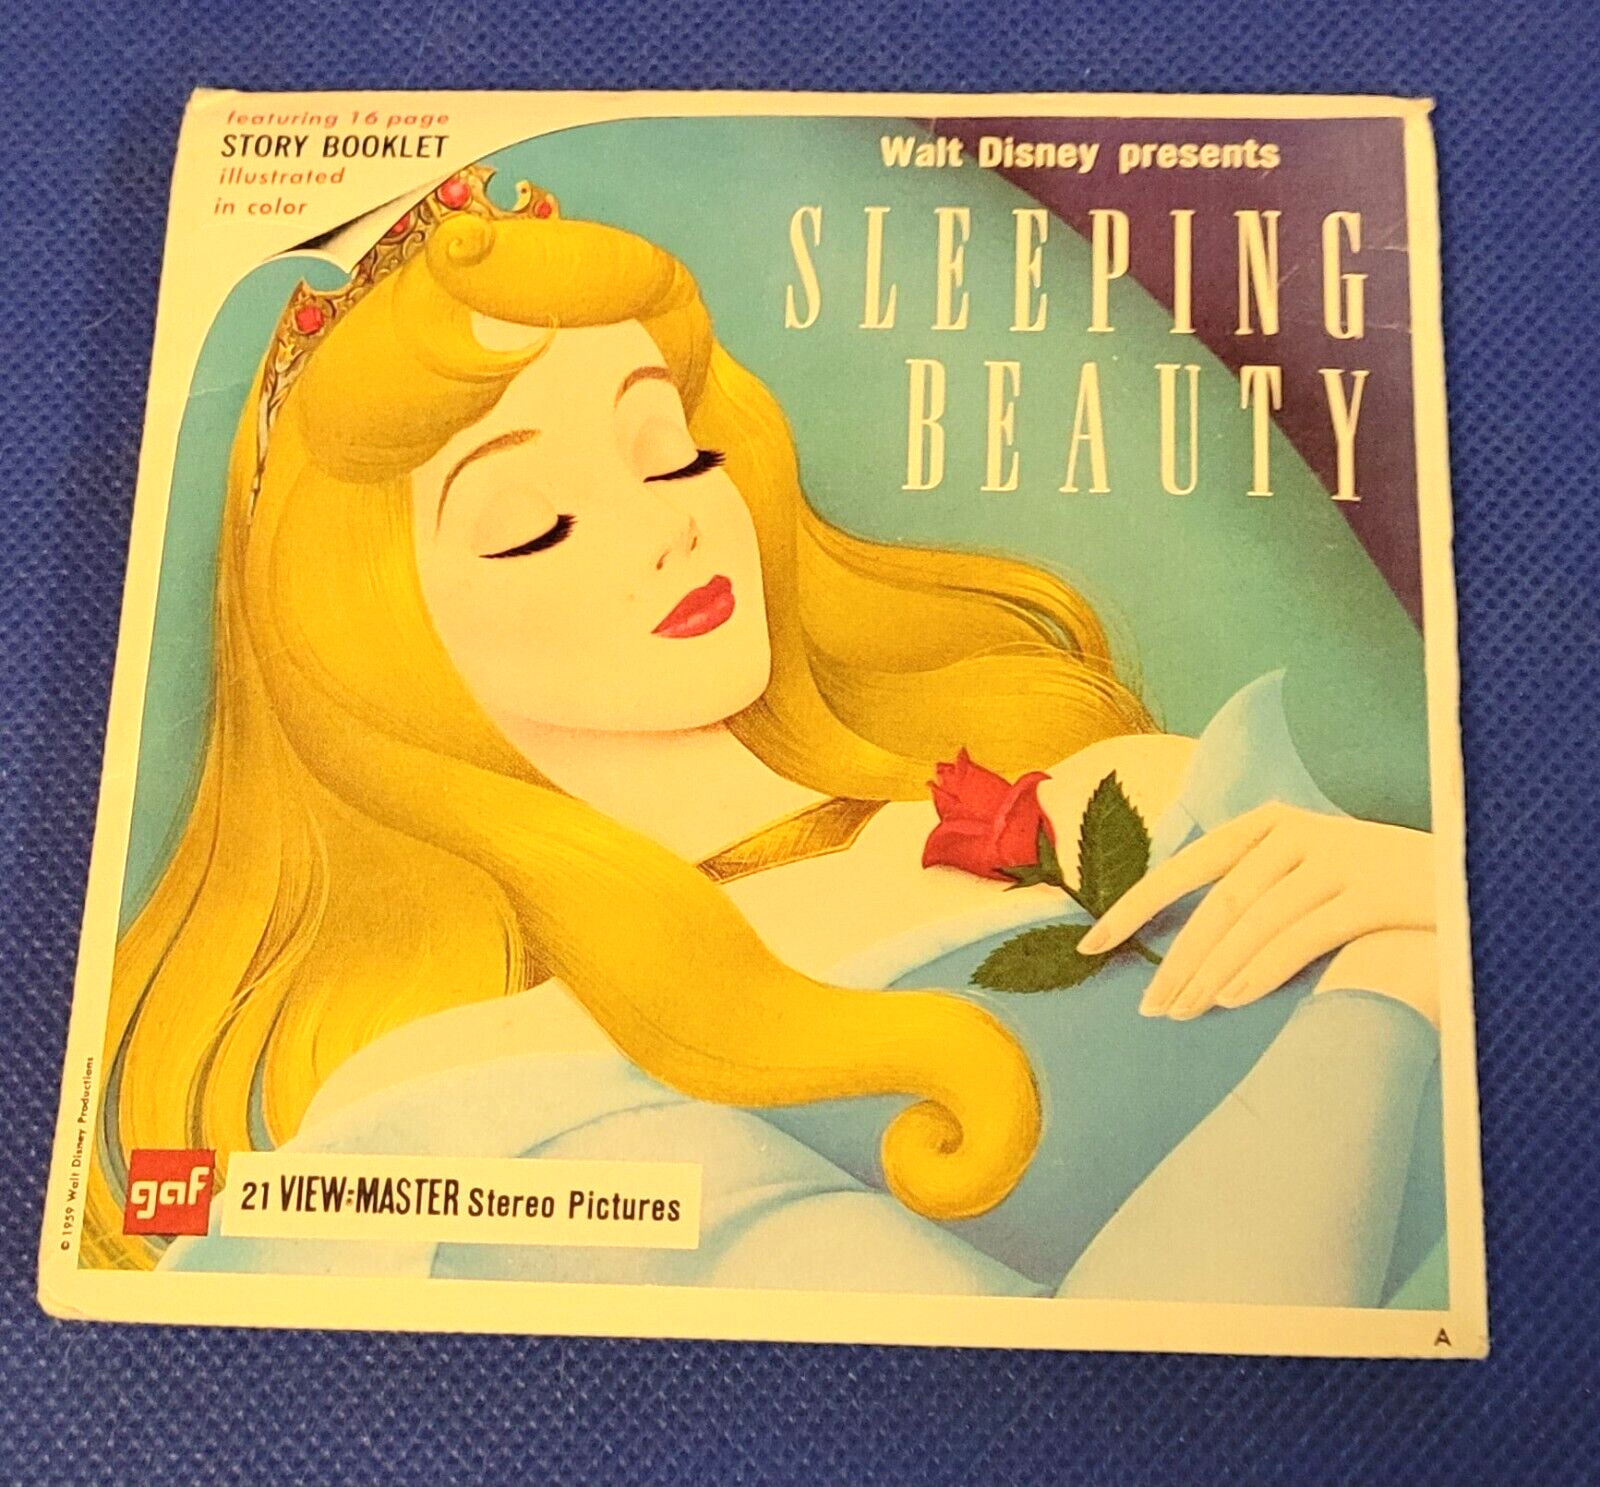 Gaf B308 Disney\'s Disney Princess Sleeping Beauty view-master 3 Reels Packet set